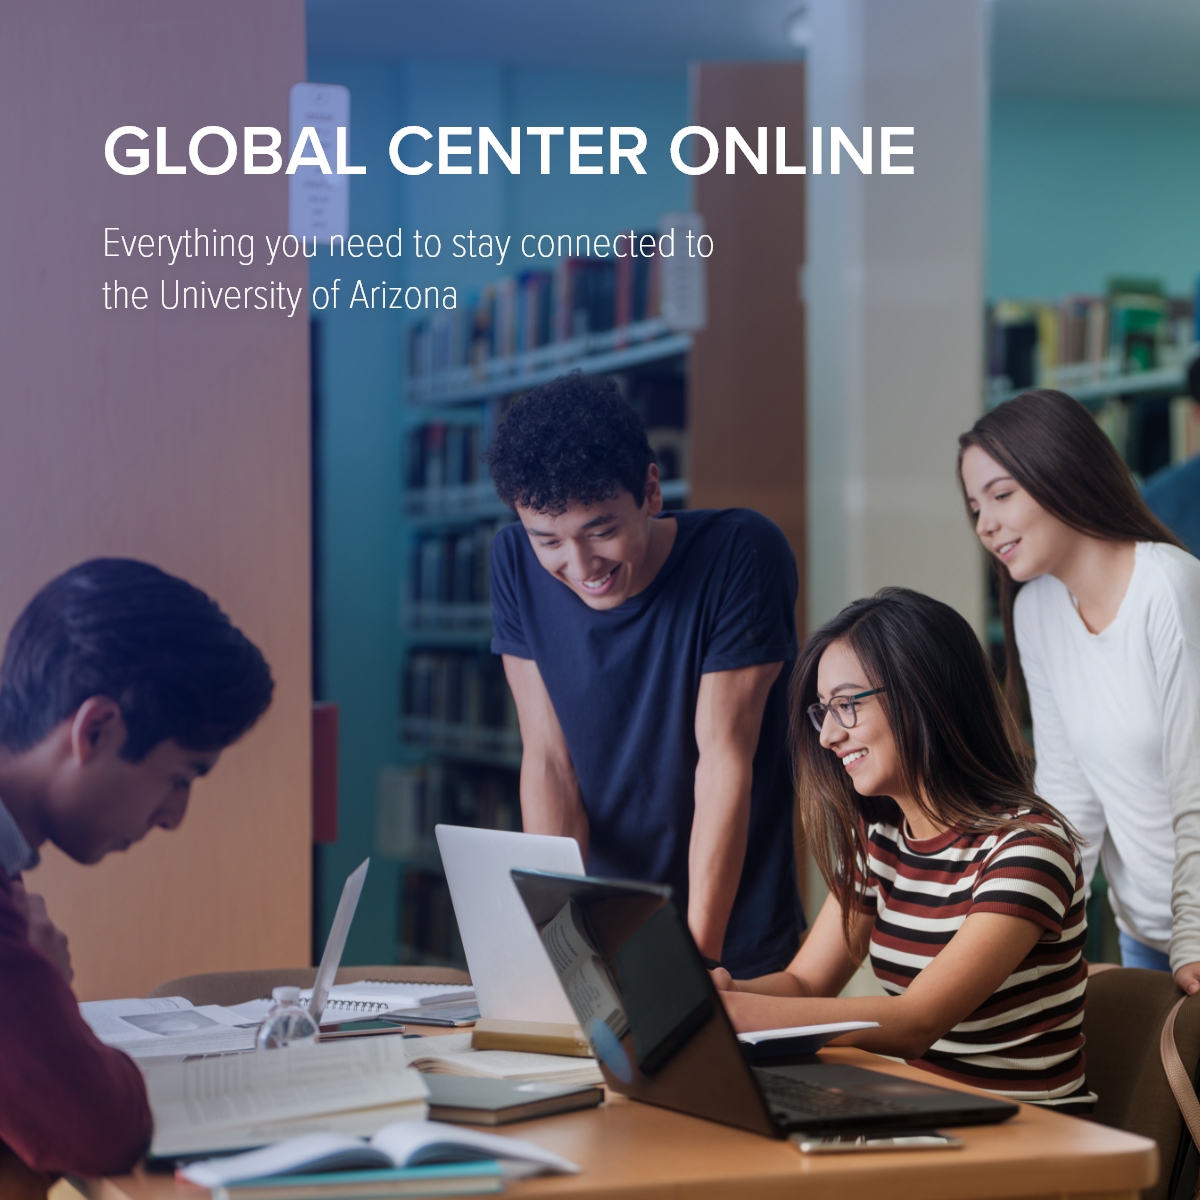 Global Center Online is Live!